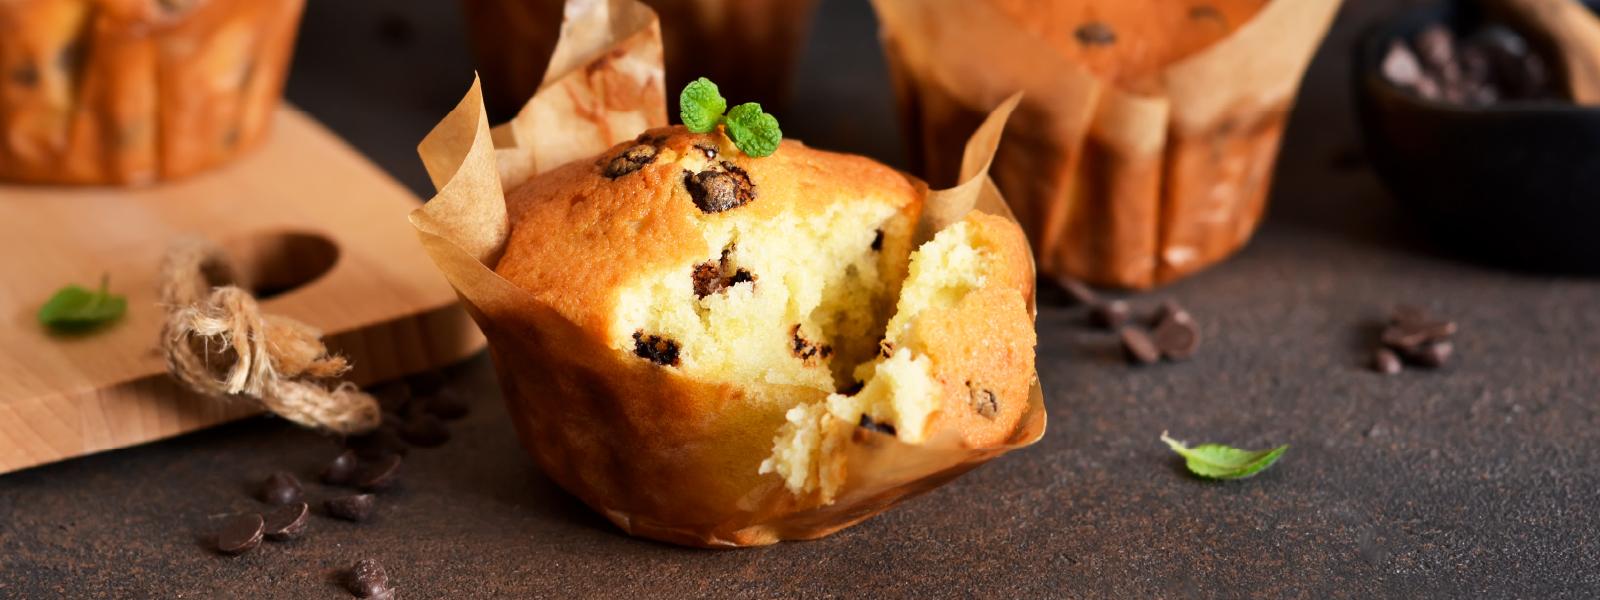 opti-bake muffin image